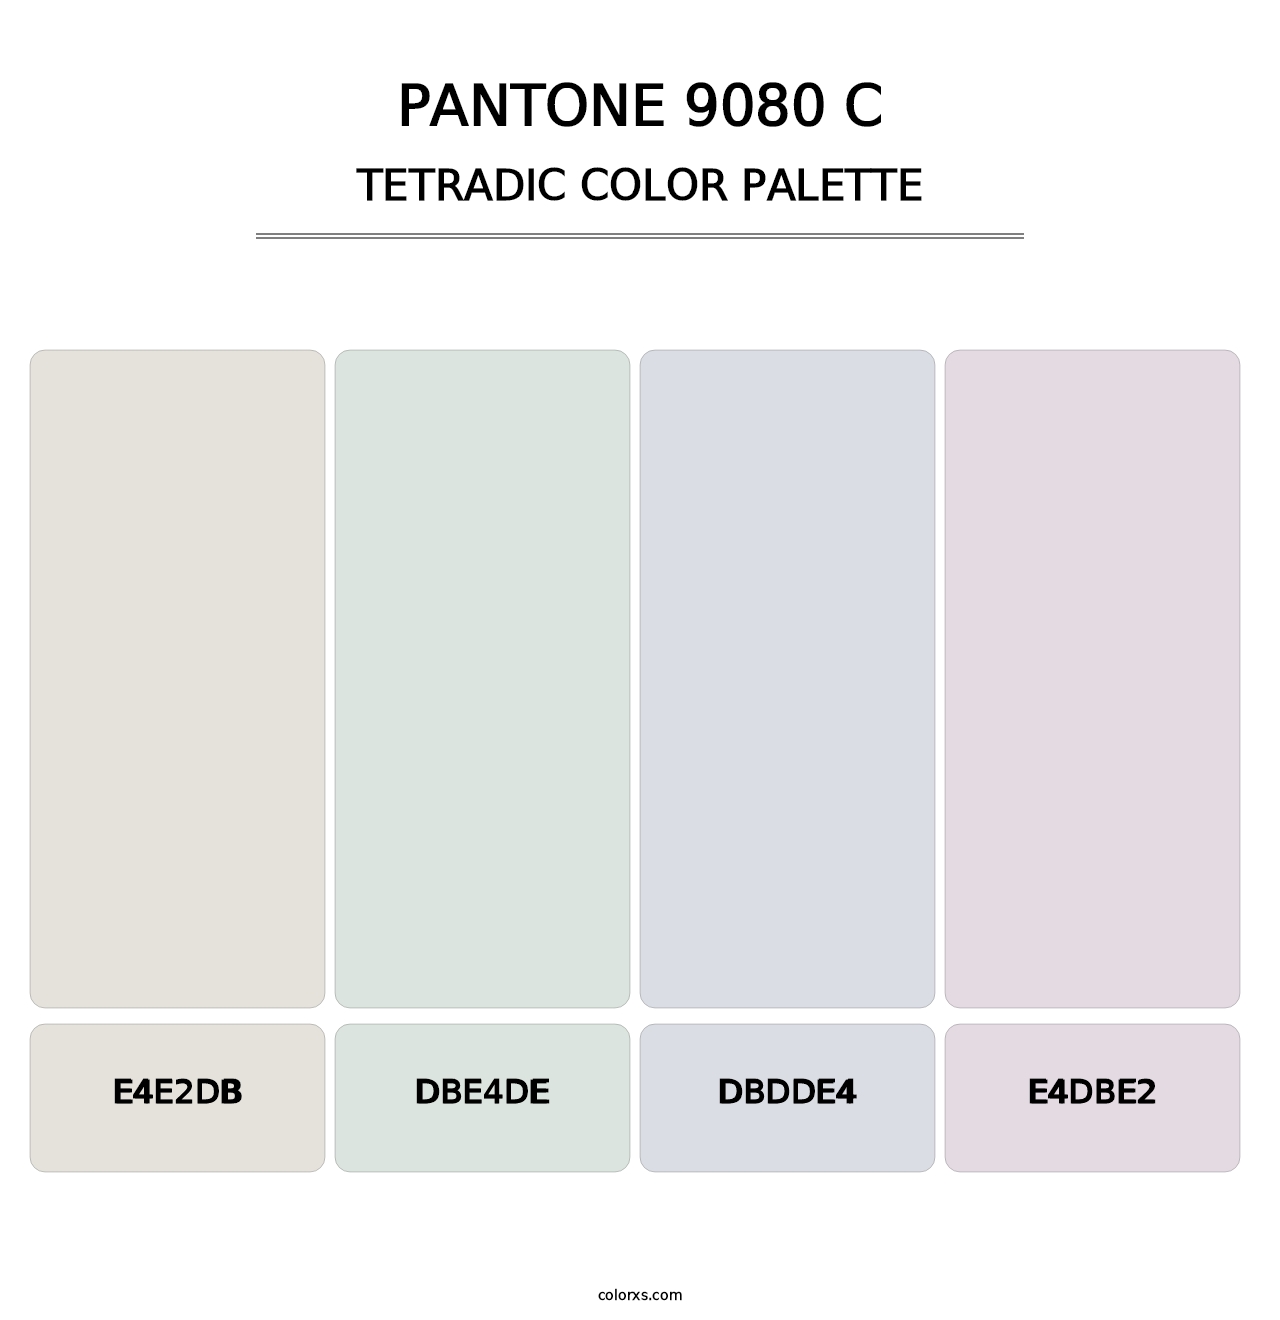 PANTONE 9080 C - Tetradic Color Palette